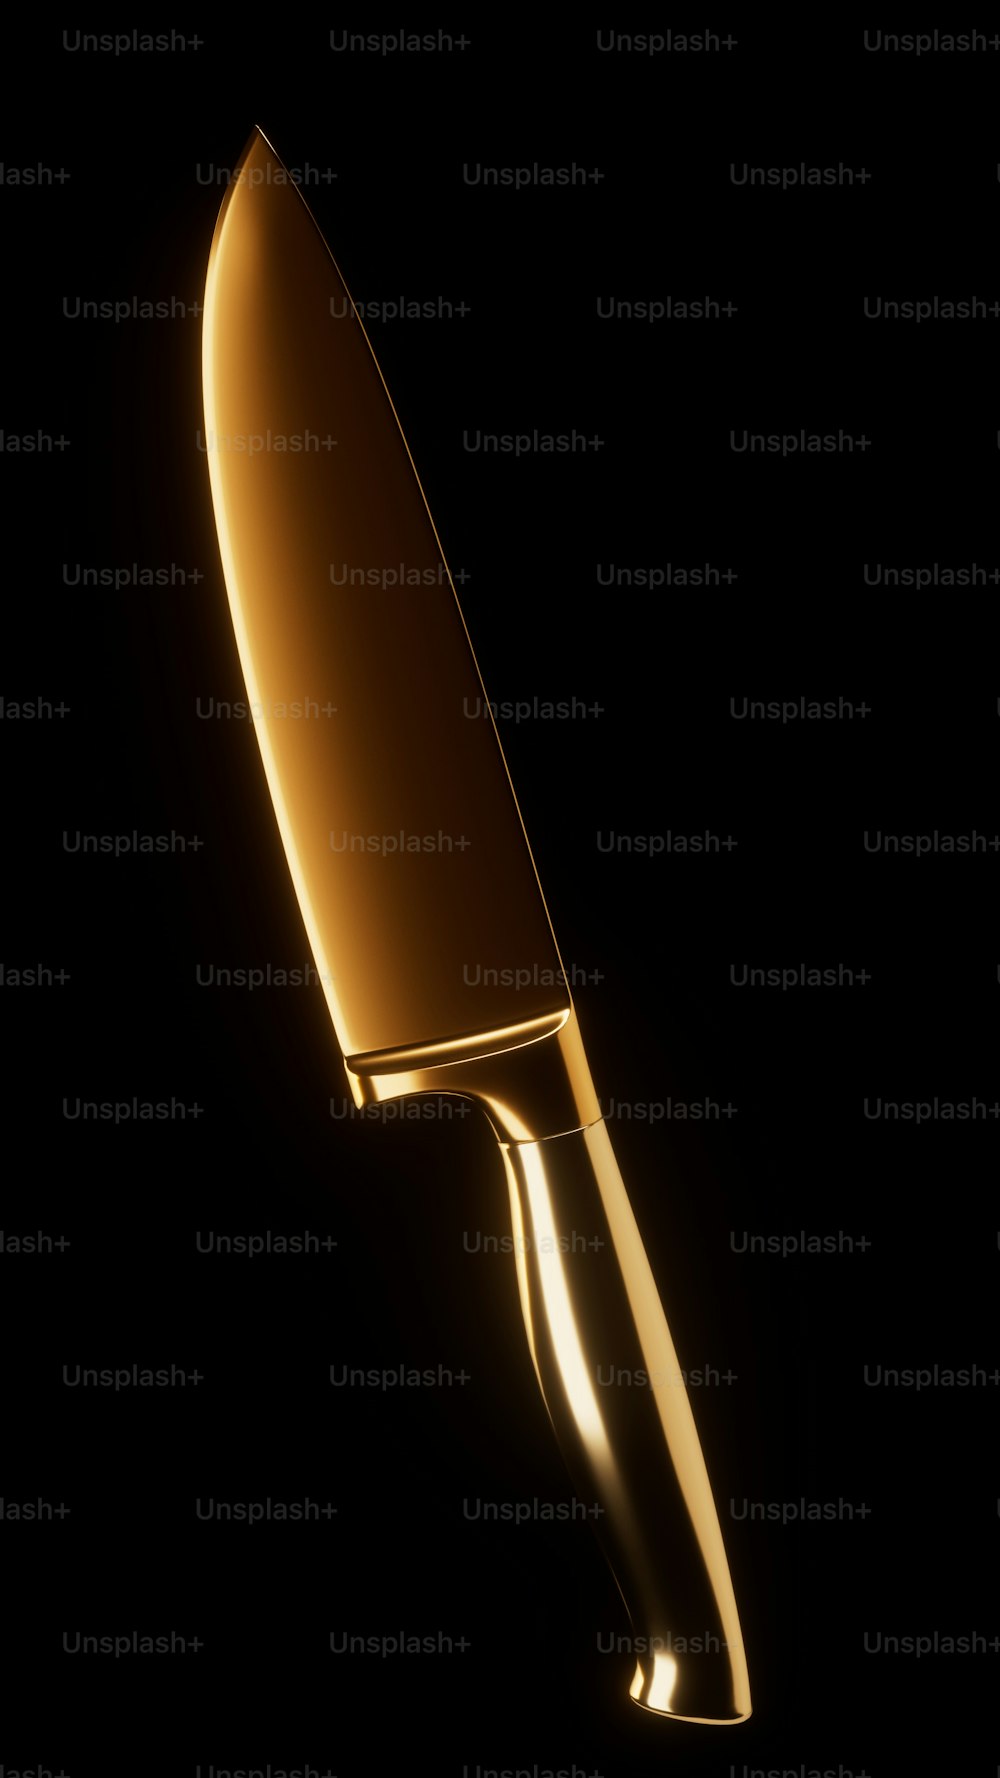 a golden knife on a black background